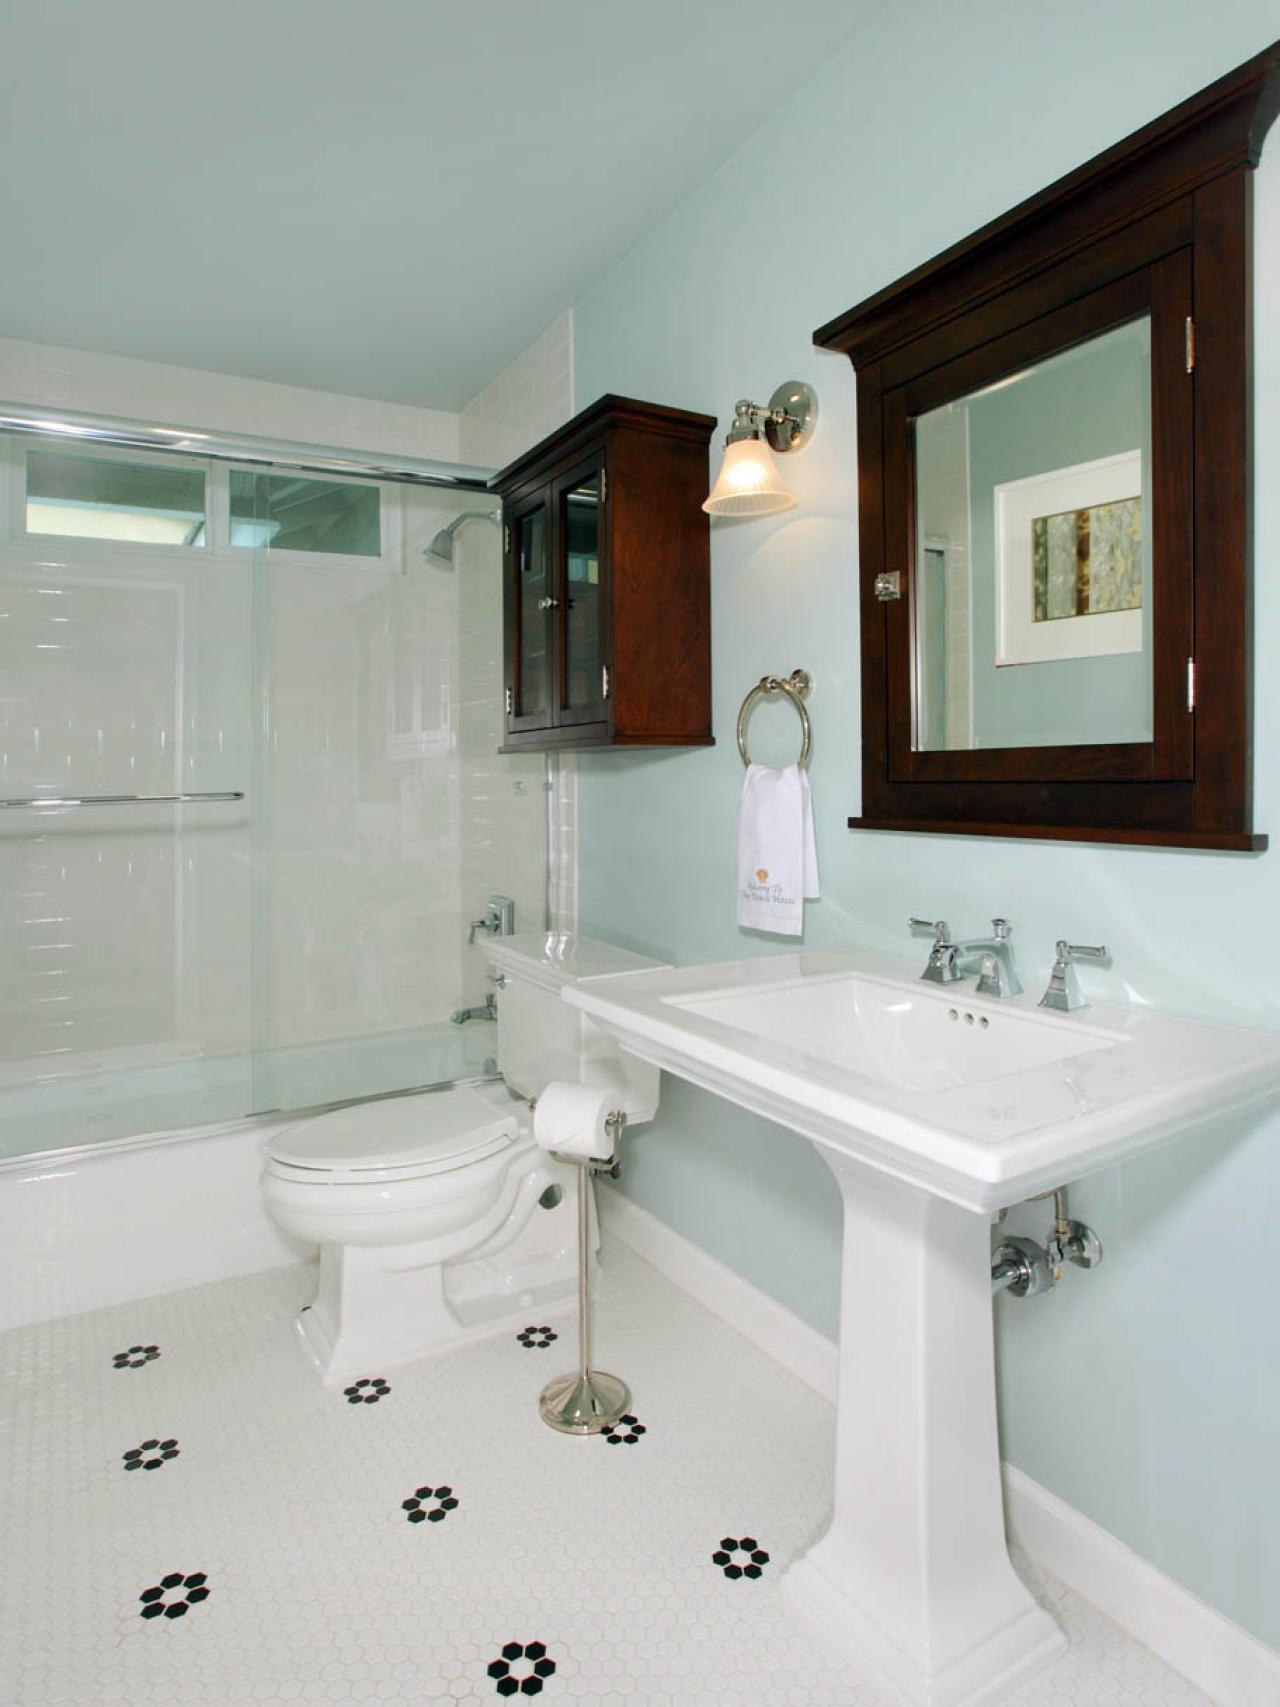 DP_Rebecca-Johnston-white-teal-traditional-bathroom-sink_v.jpg.rend.hgtvcom.1280.1707